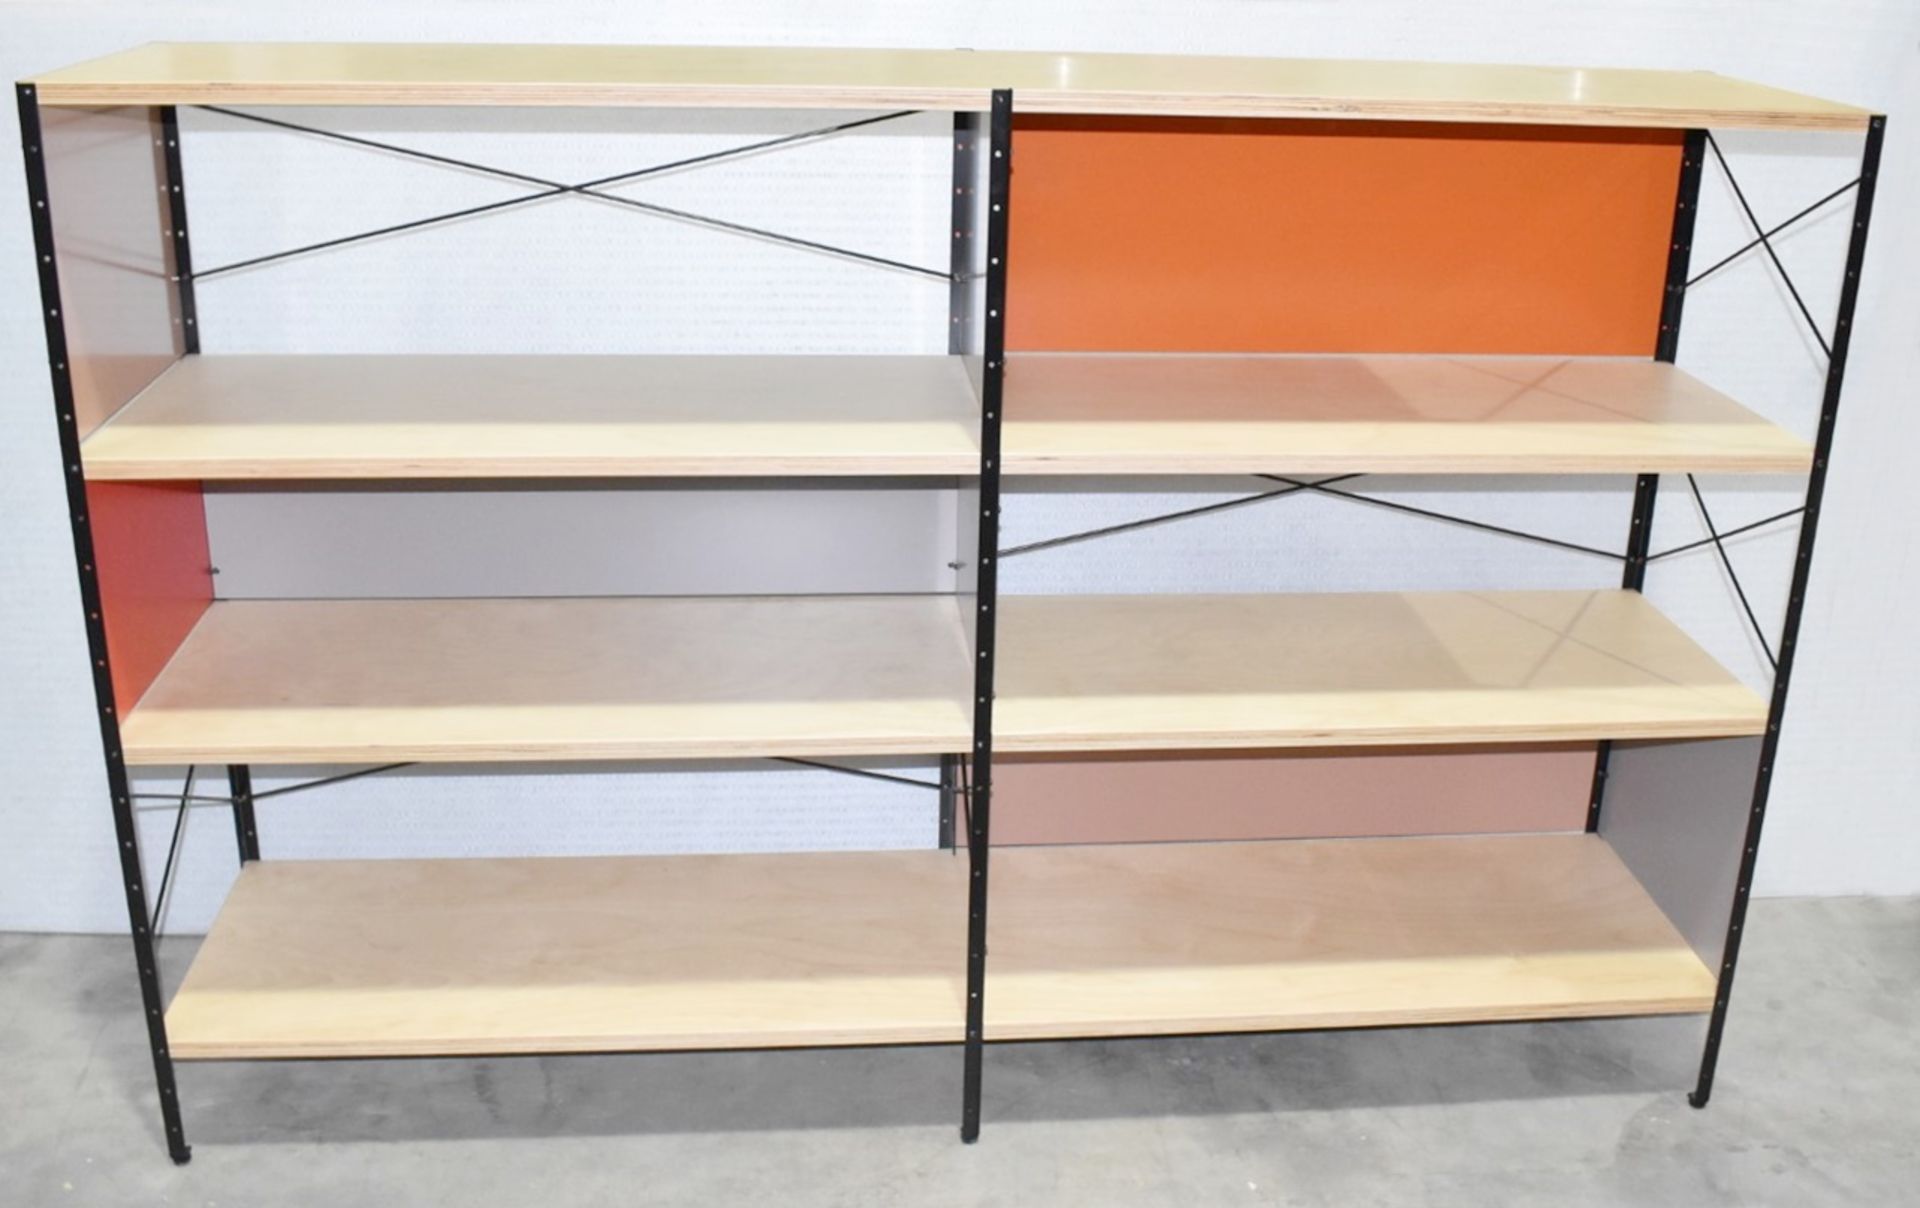 1 x VITRA Eames 'Esu Shelf 3' Designer Bookcase / Storage Unit - Original RRP £2,555 - Image 3 of 7